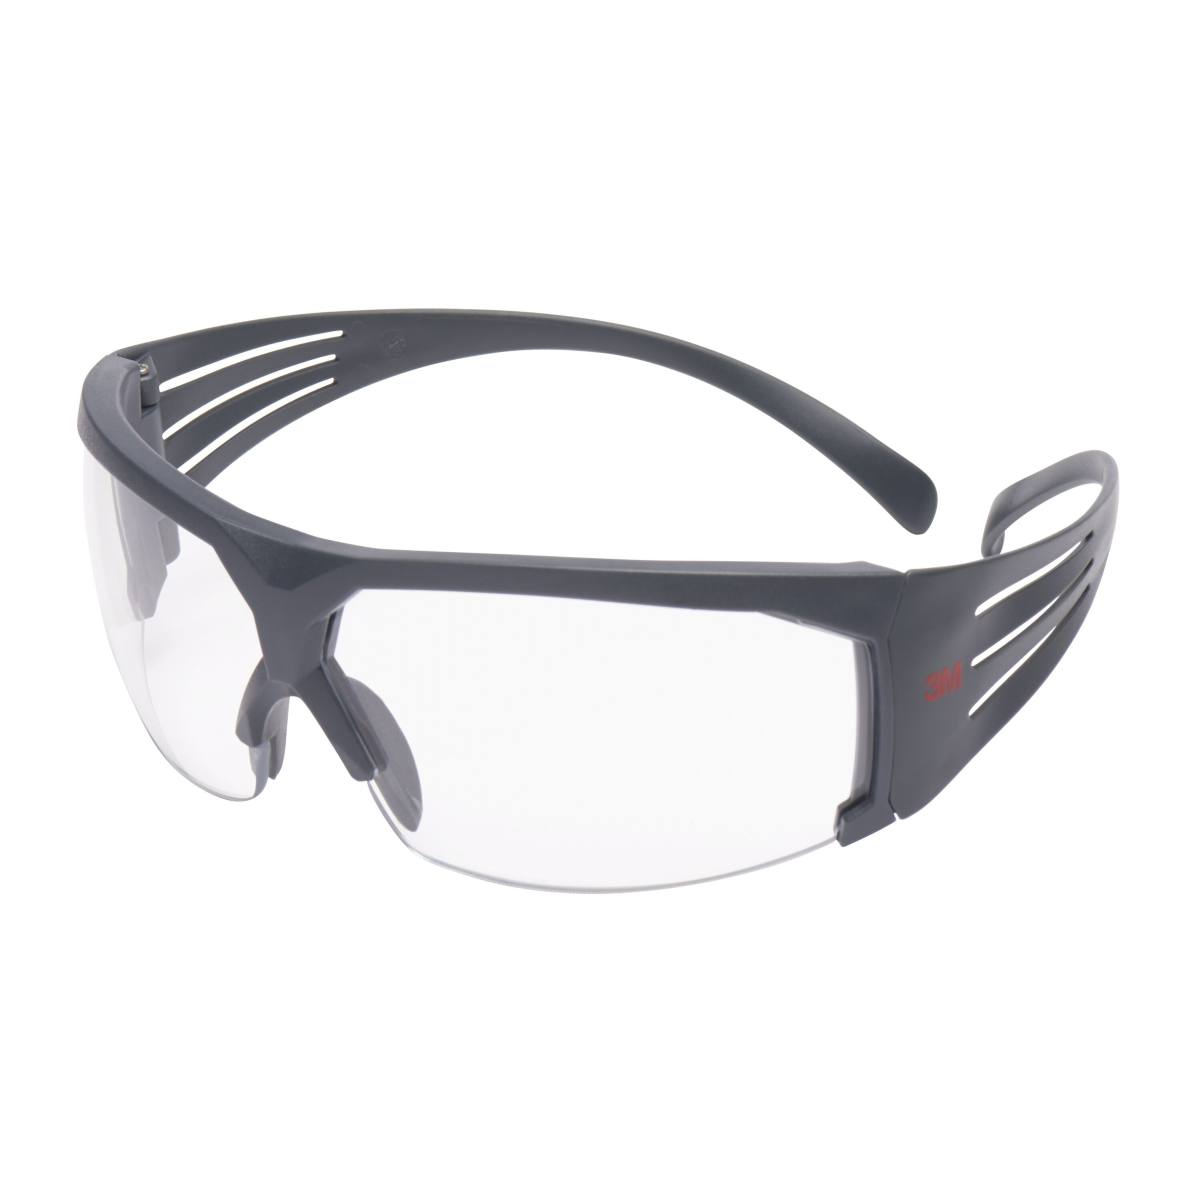 3M SecureFit 600 Schutzbrille, graue Bügel, Schaumrahmen, Scotchgard Anti-Fog-/Antikratz-Beschichtung (K&N), transparente Scheibe, SF601SGAF/FI-EU